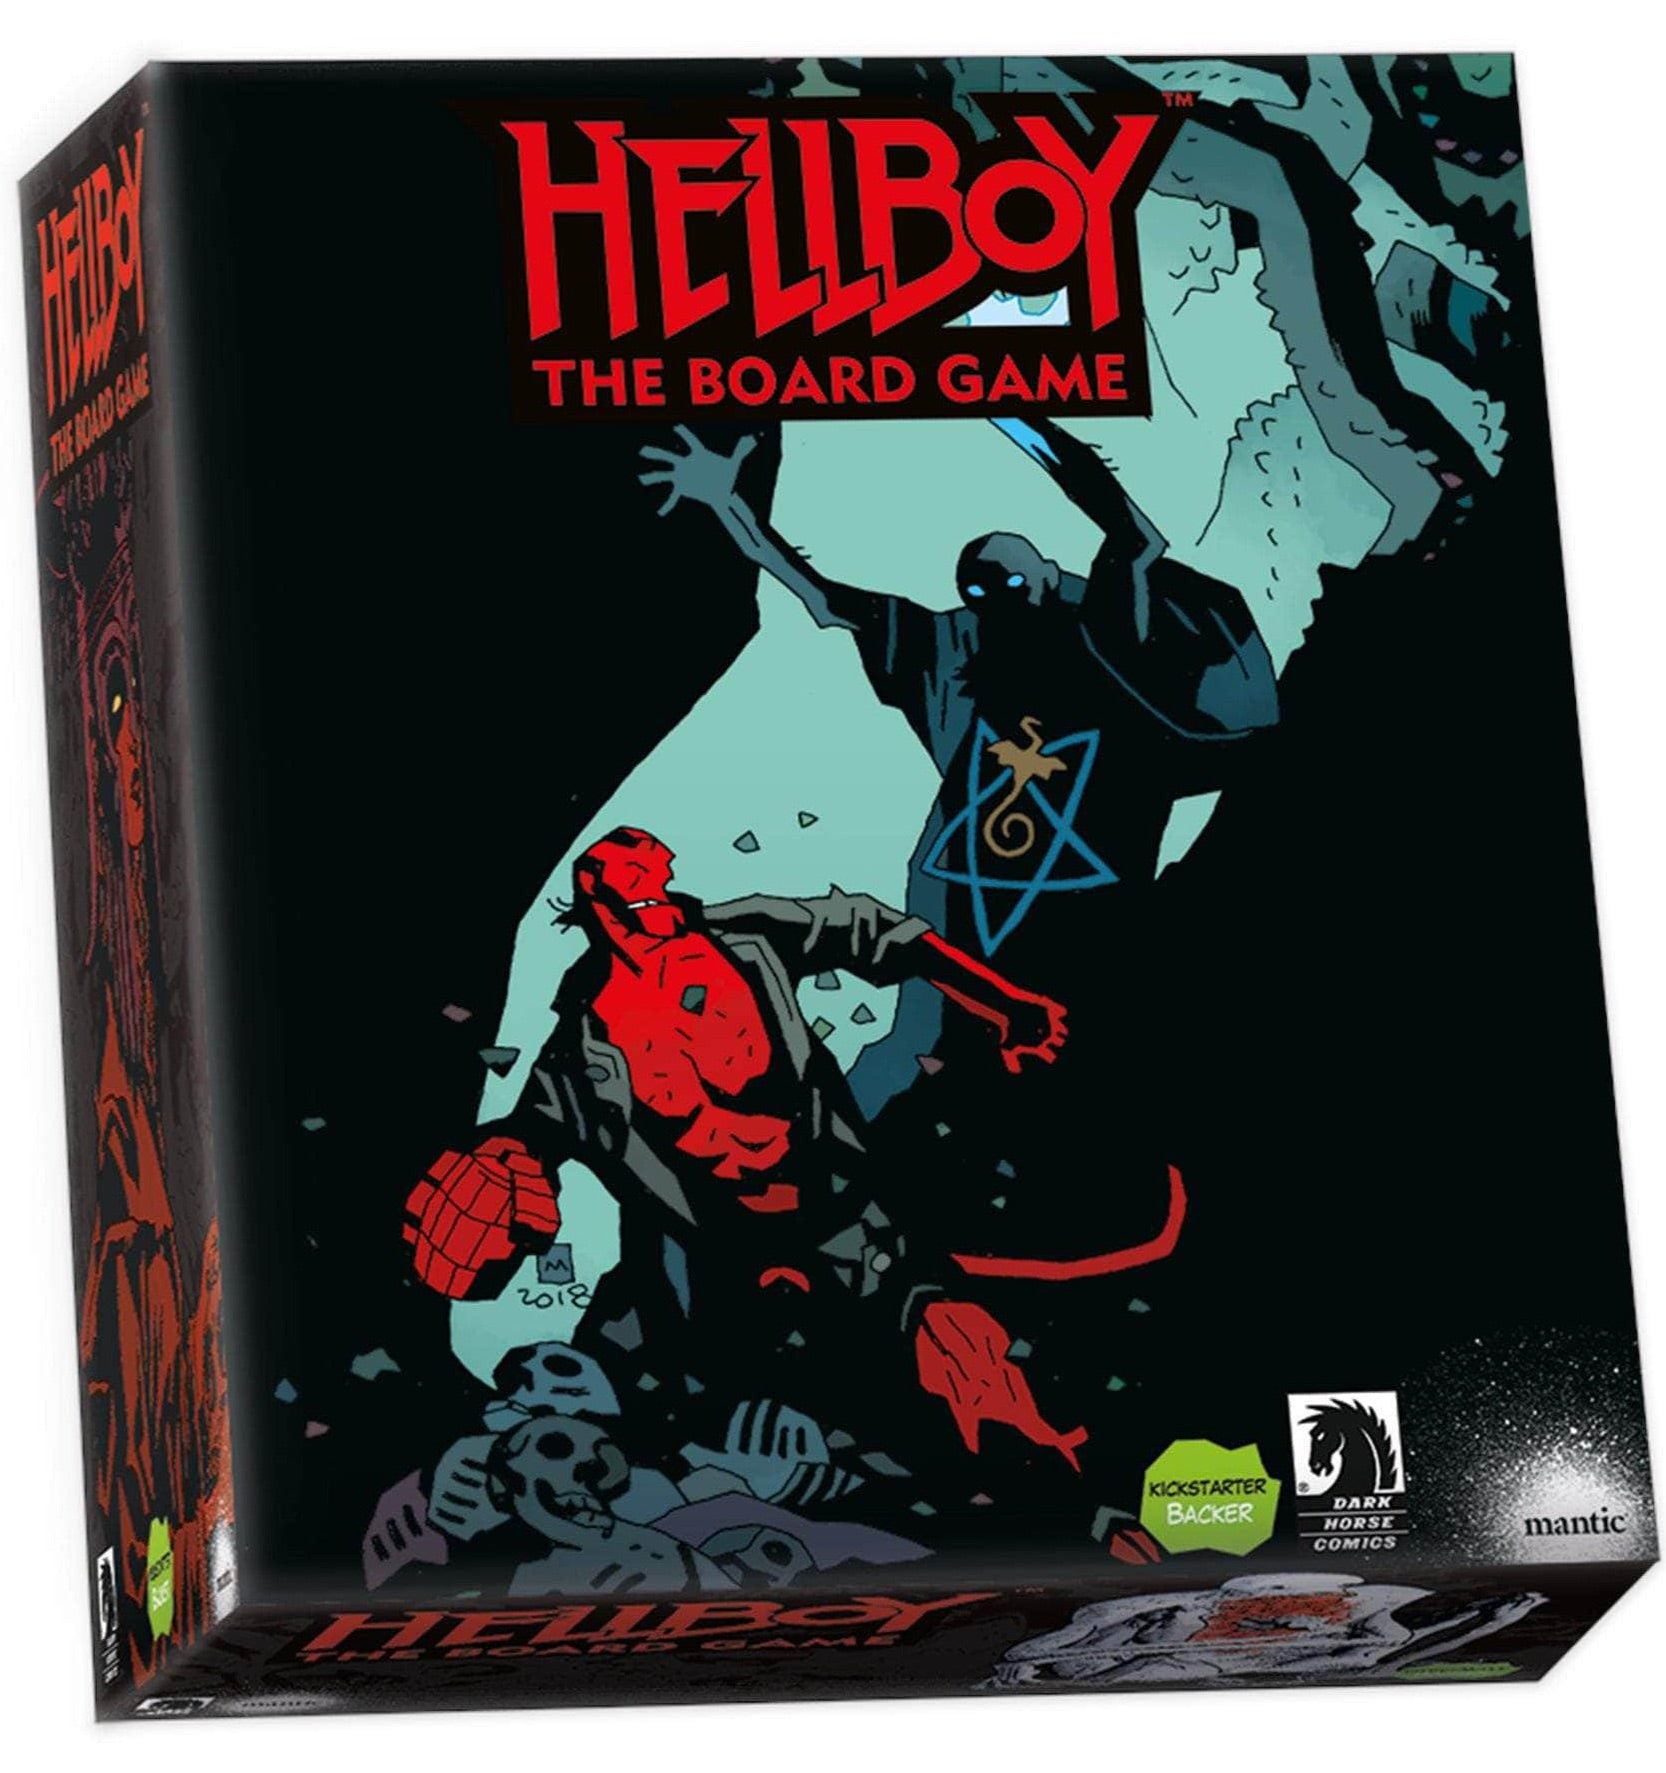 Hellboy: The Board Game - Pledge of Doom Poledle (Kickstarter w przedsprzedaży Special) Kickstarter Expansion Mantic Games KS001139a